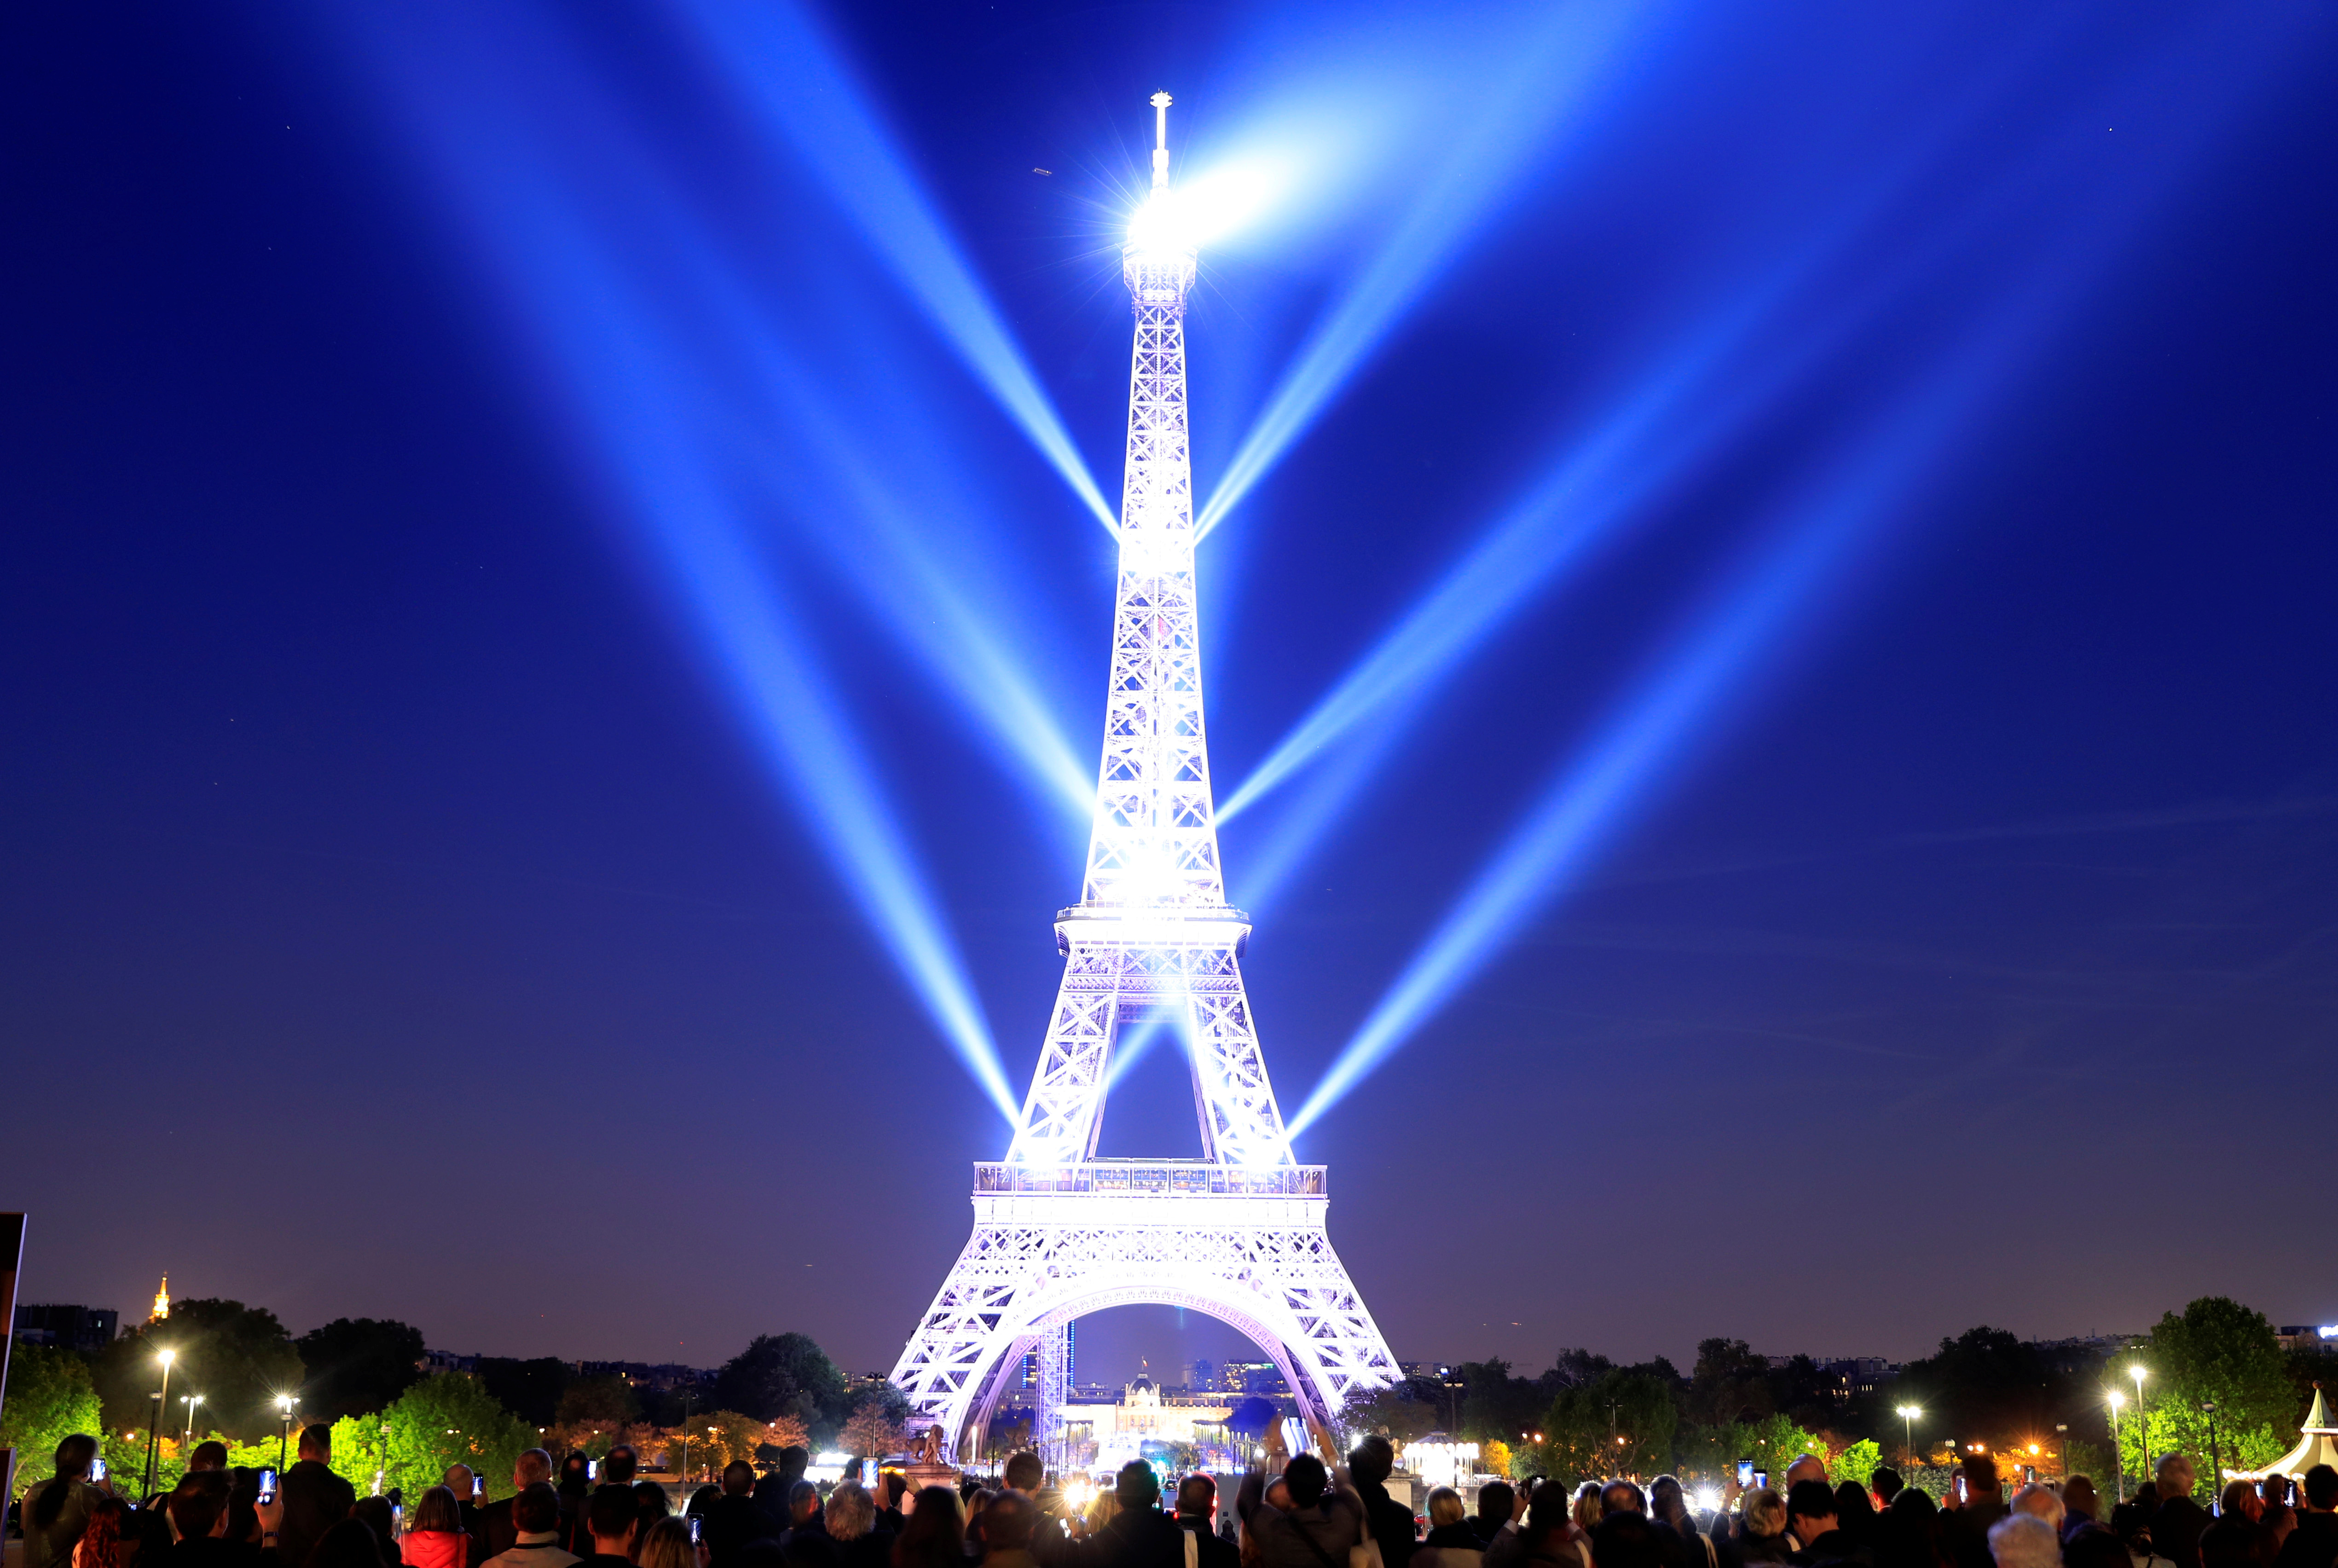 Tower celebrates anniversary elaborate light show - National |